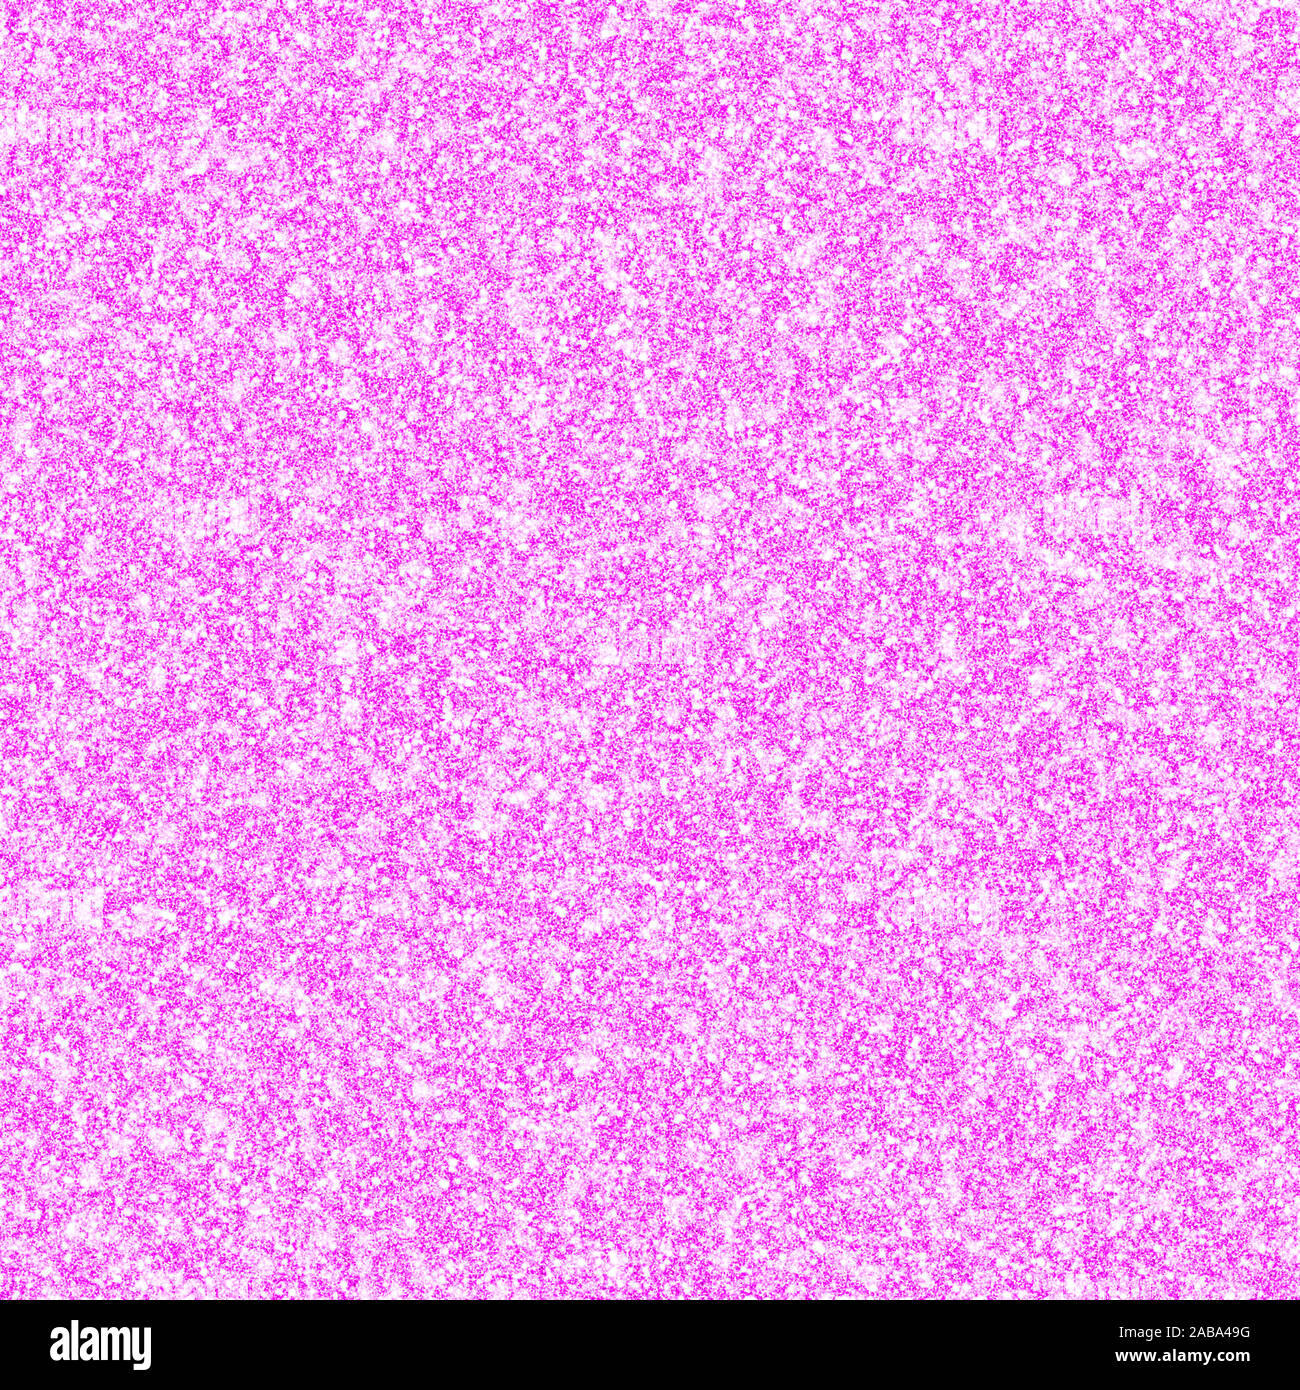 pink glitter background Stock Photo - Alamy